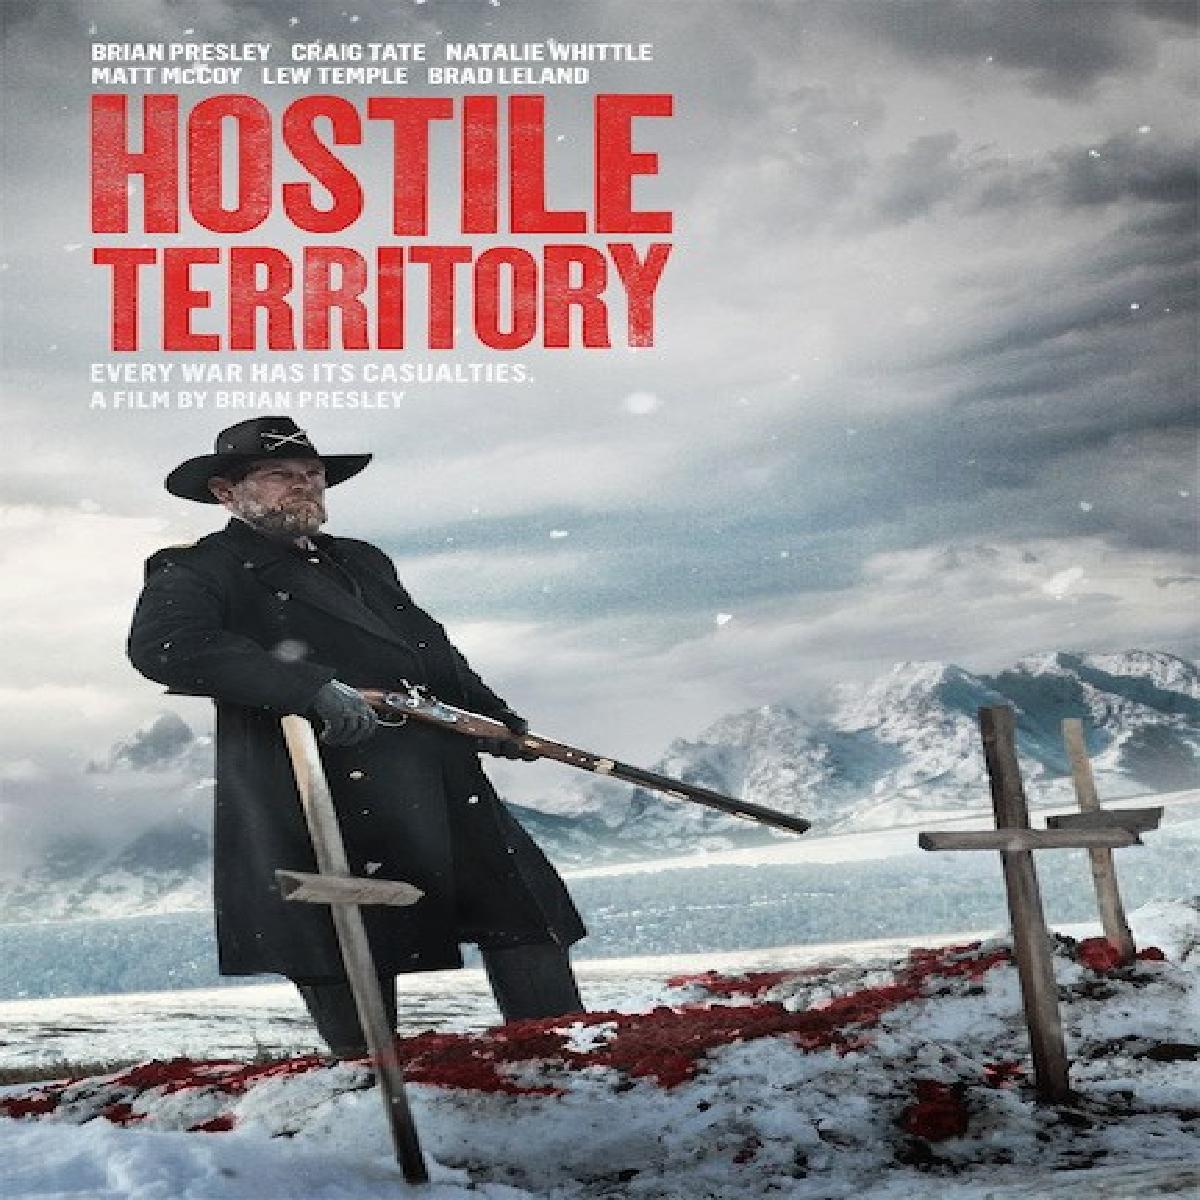 Hostile Territory Trailer Is Here